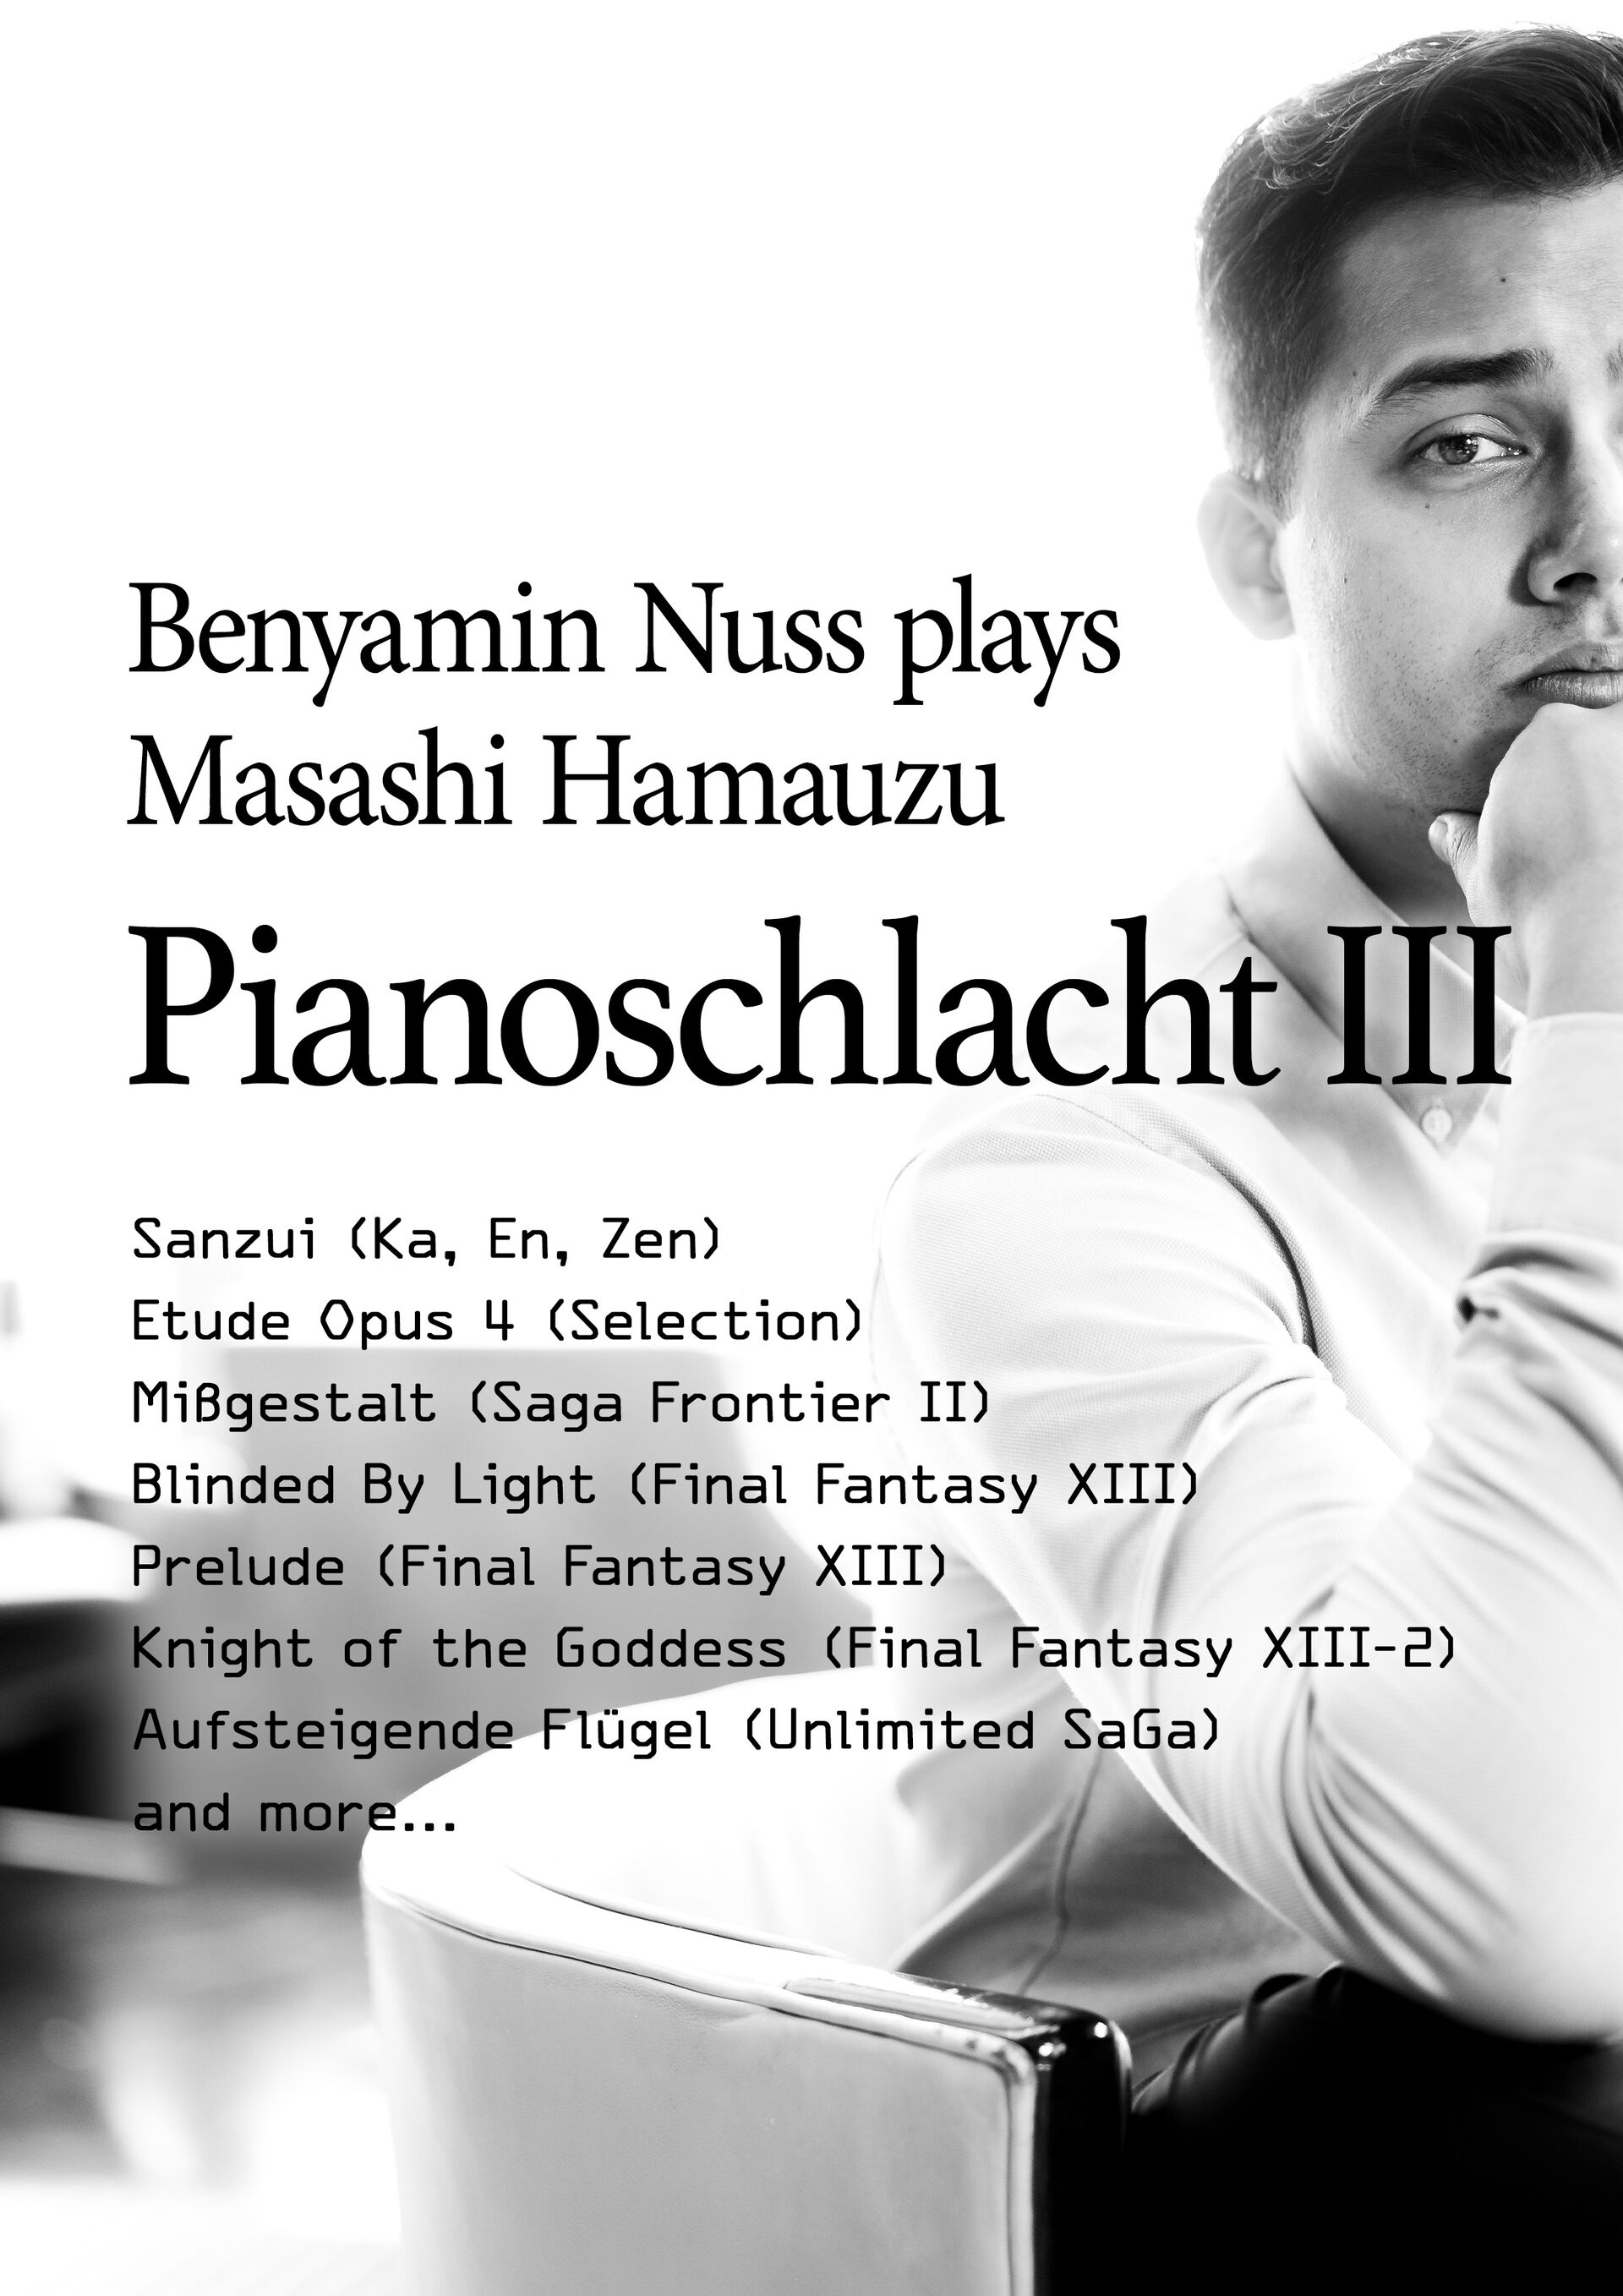 [Streaming+] Benyamin Nuss plays Masashi Hamauzu Pianoschlacht III